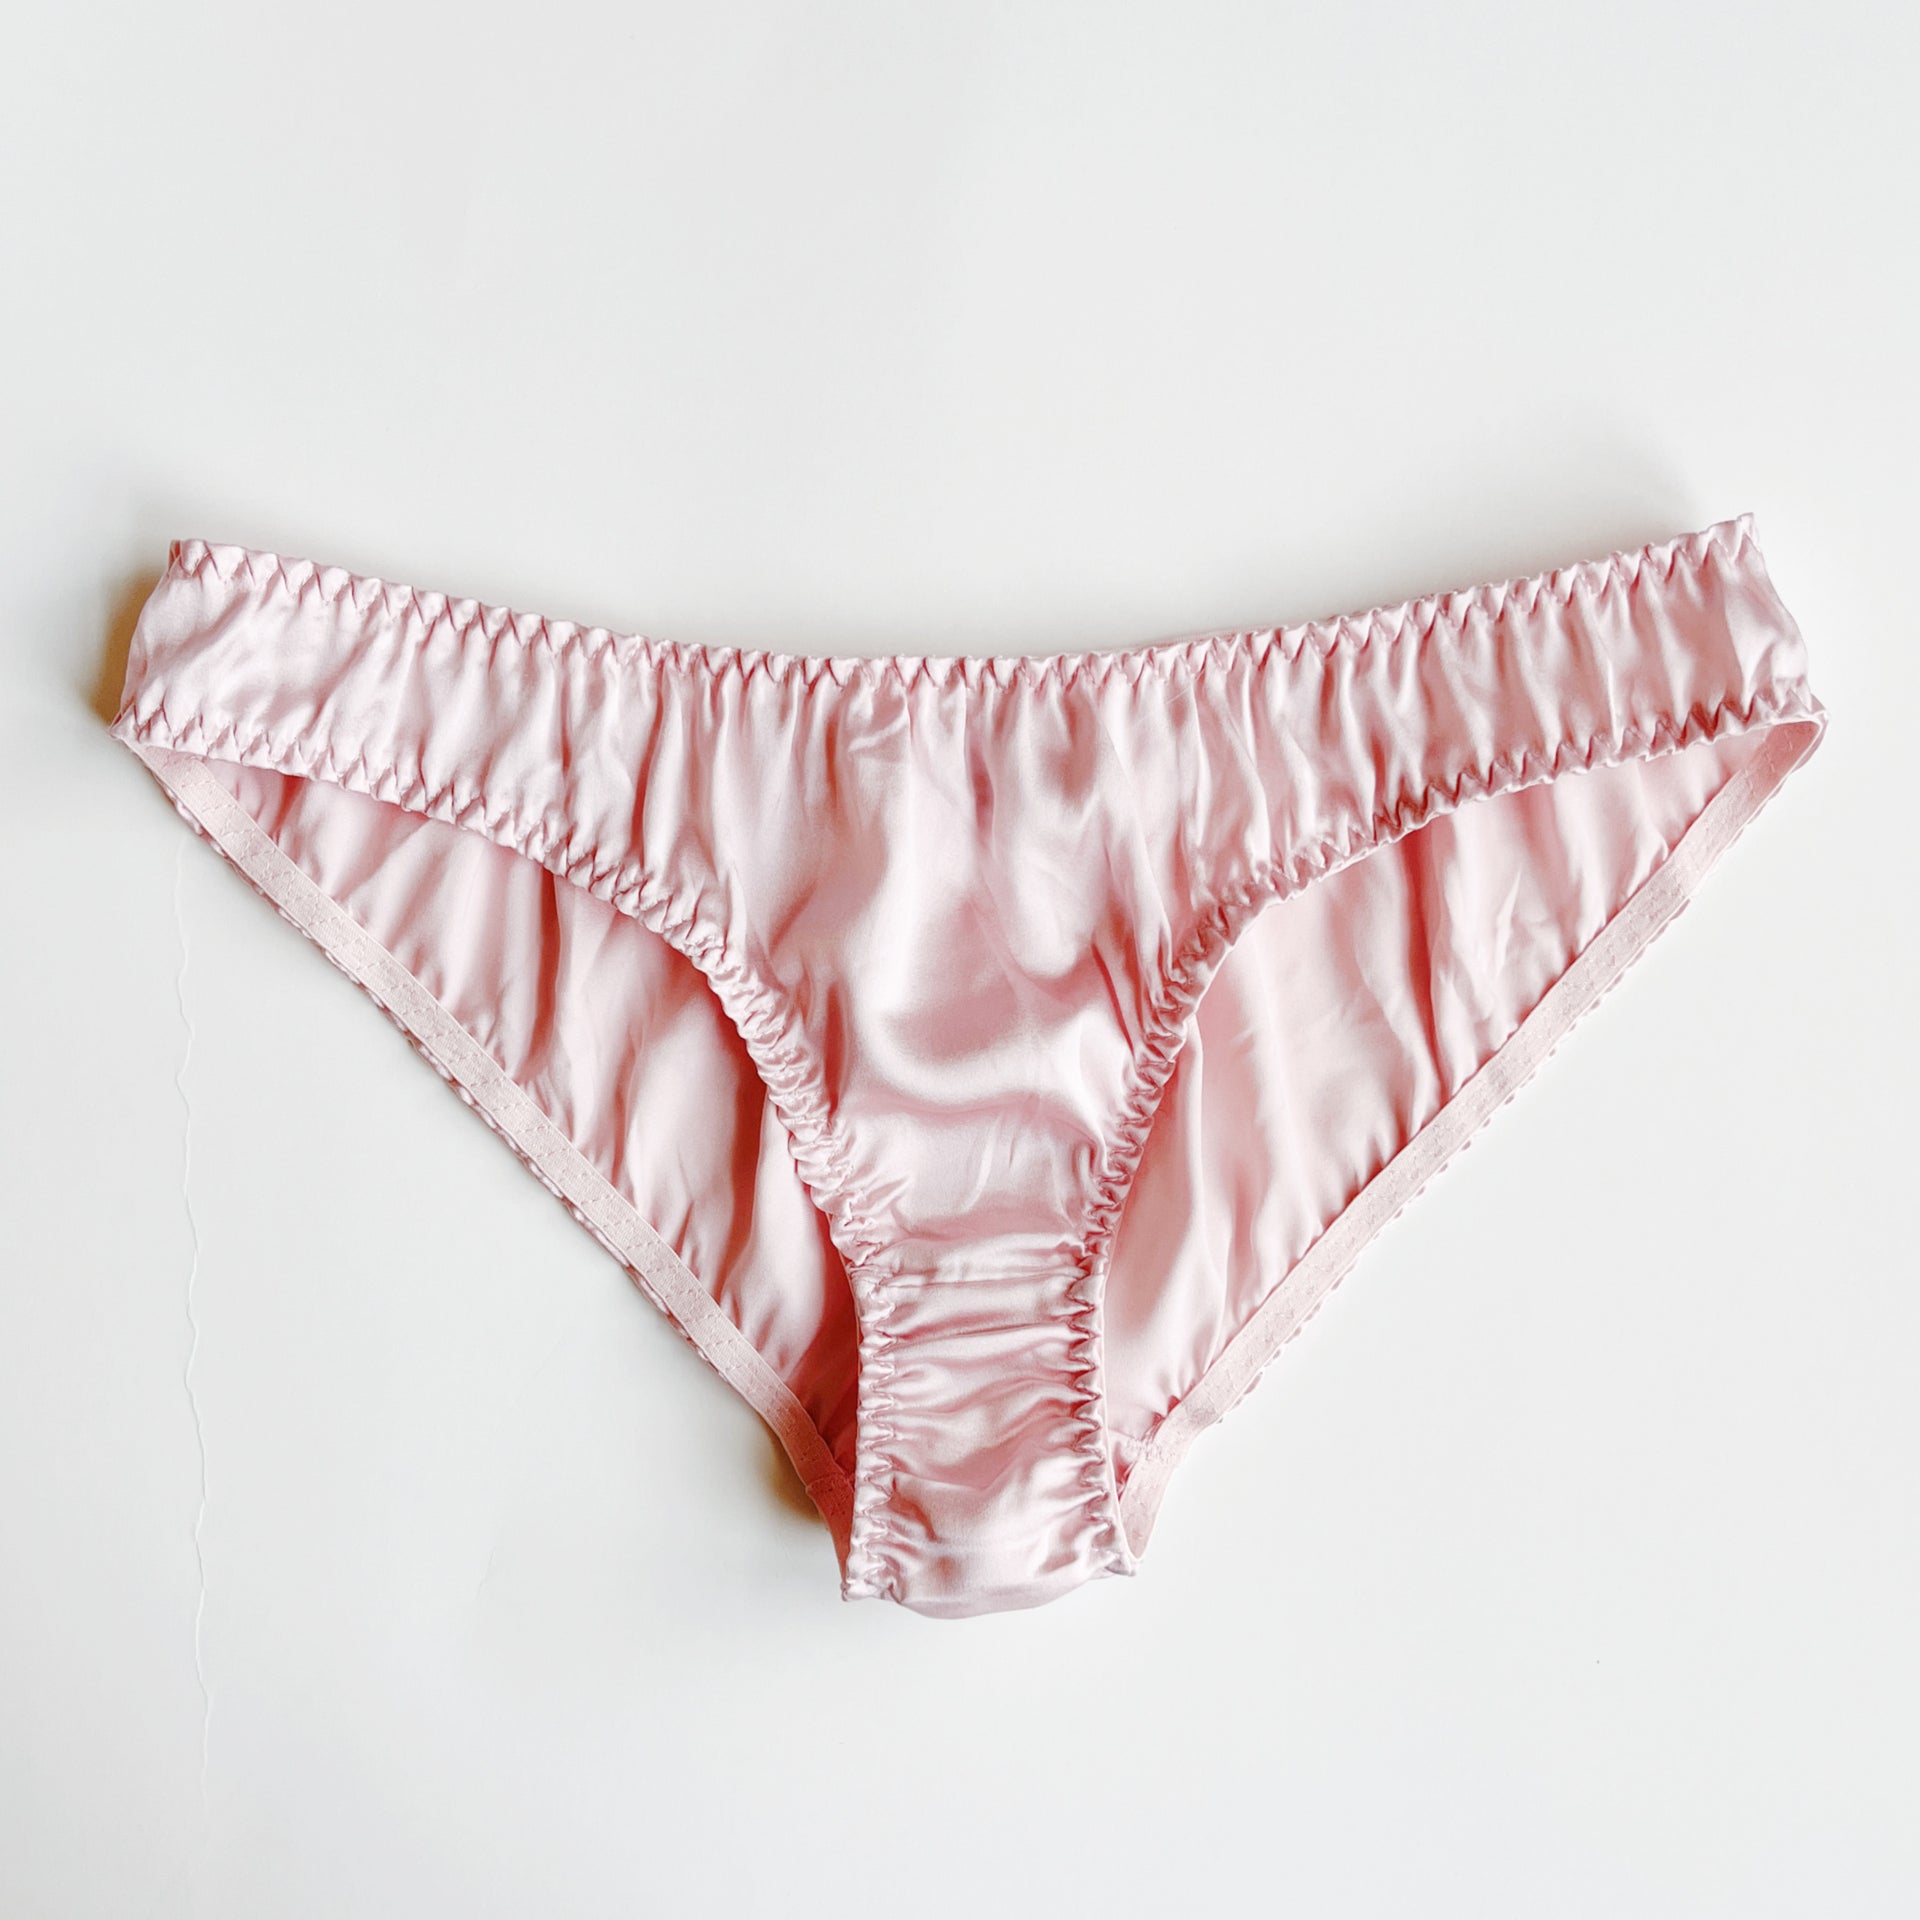 Buy ALove Women Nylon Bikini Panties Silk Soft Lace Trim Underwear